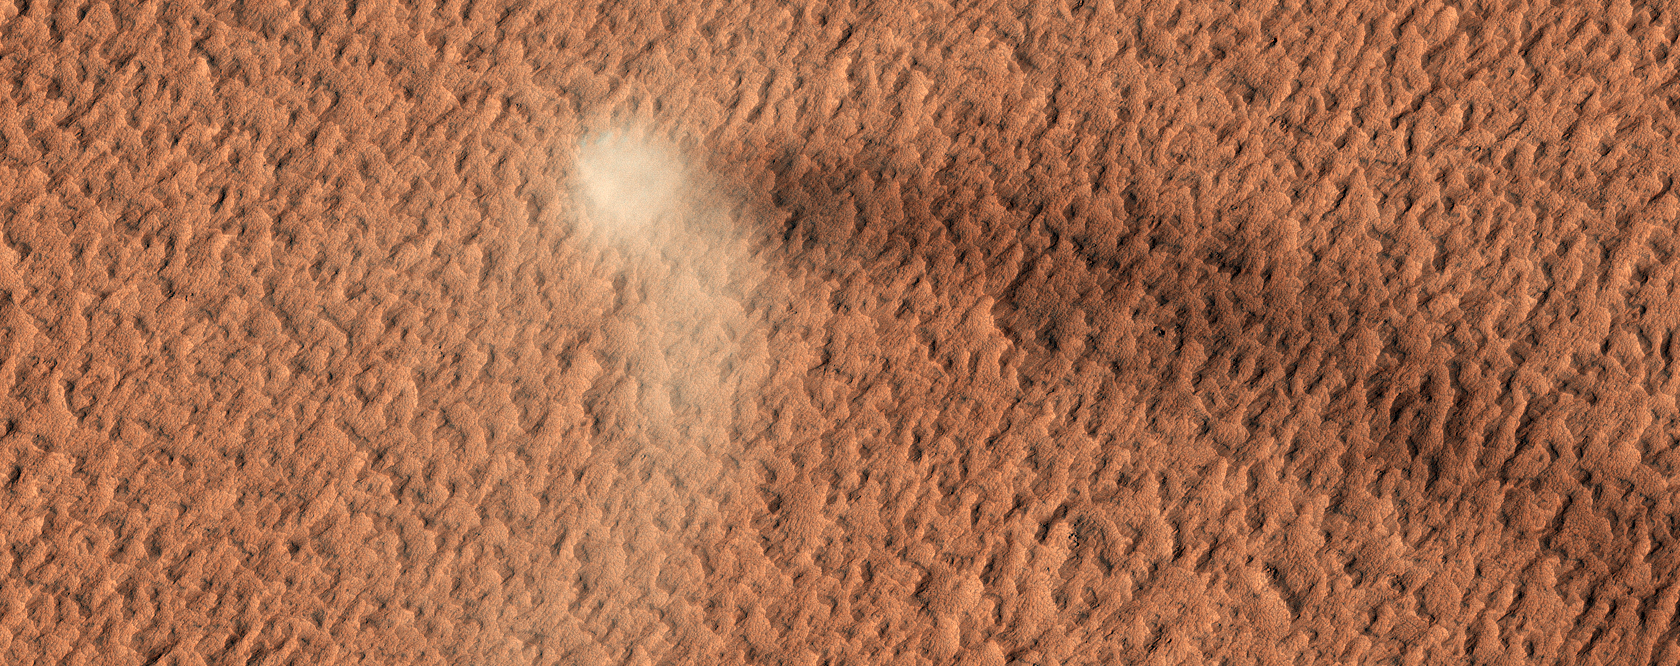 Planeta Marte furtuna nisip